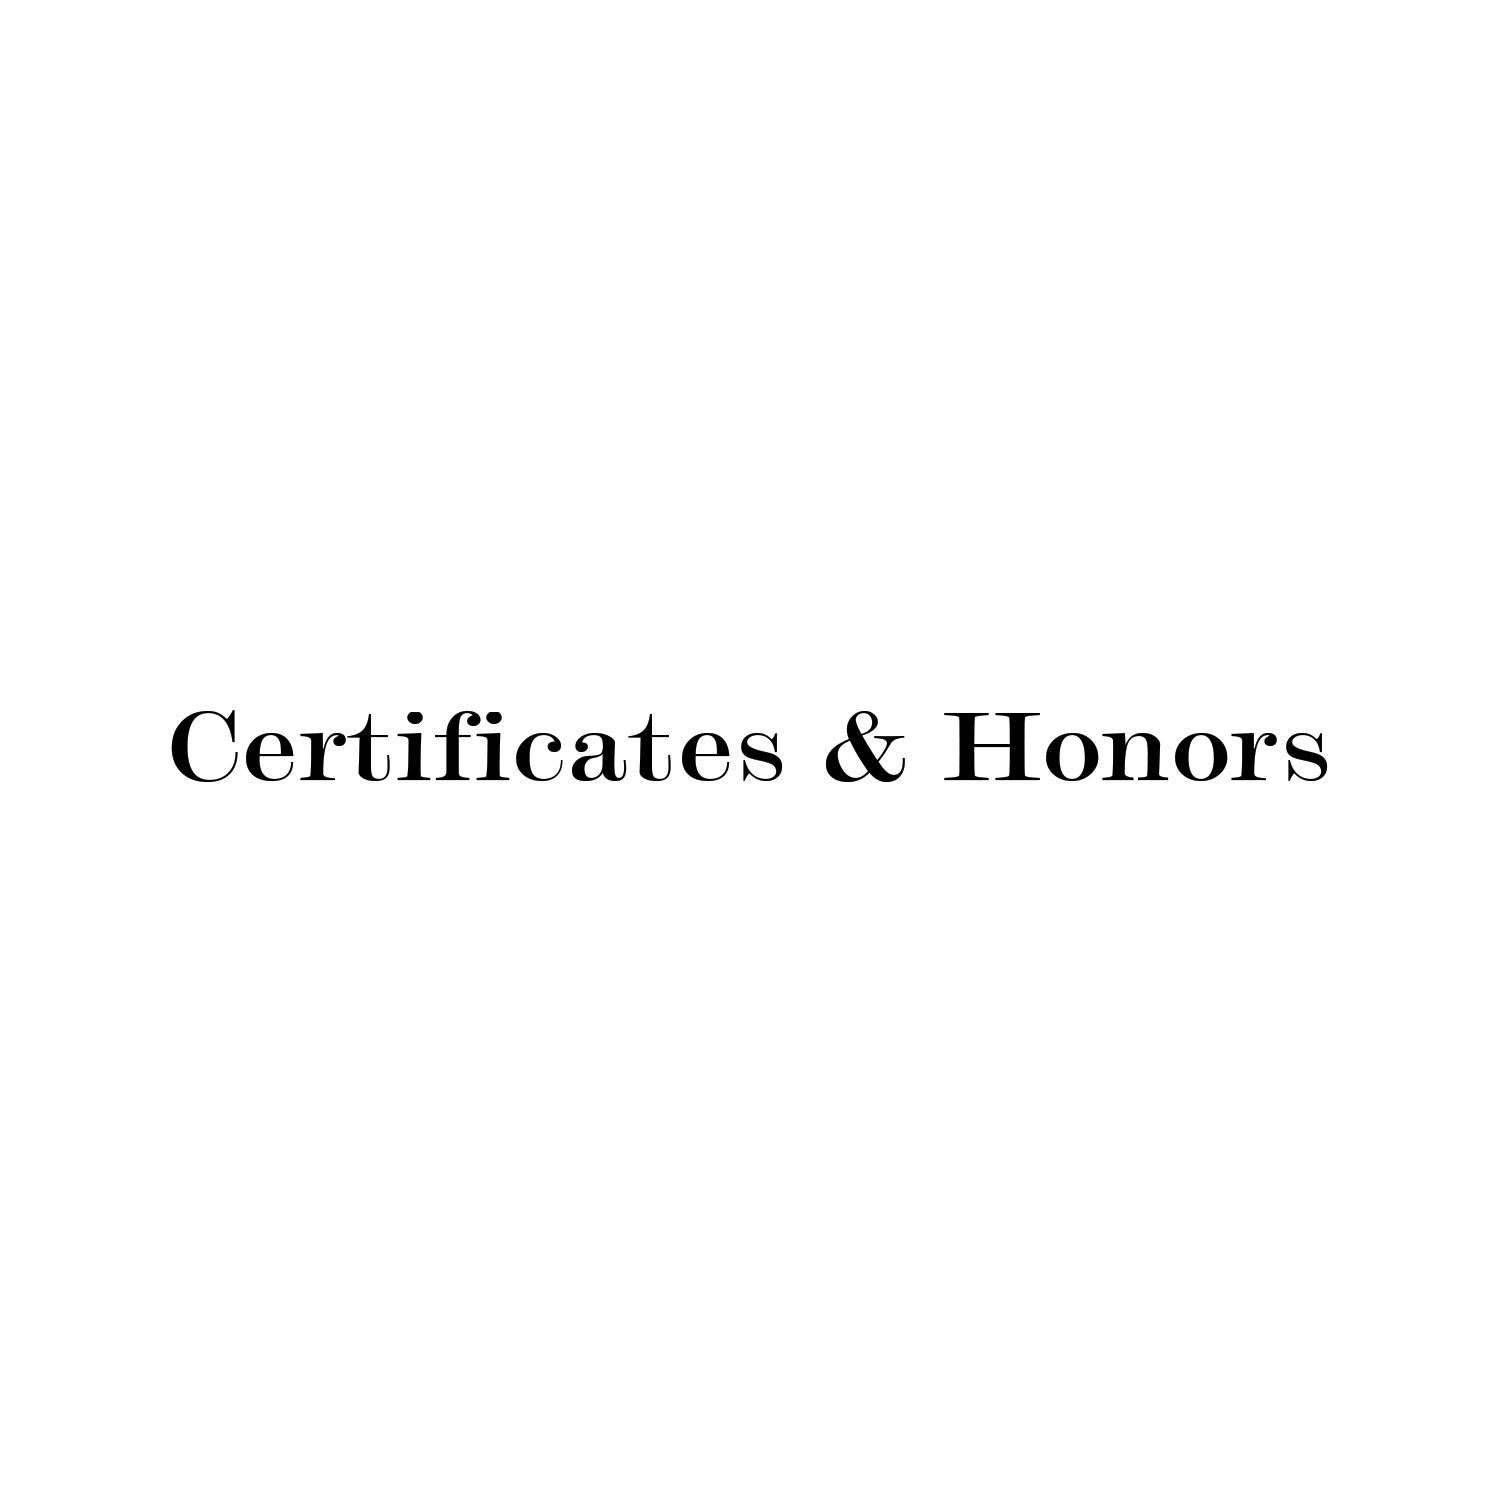 Certificates & Honors